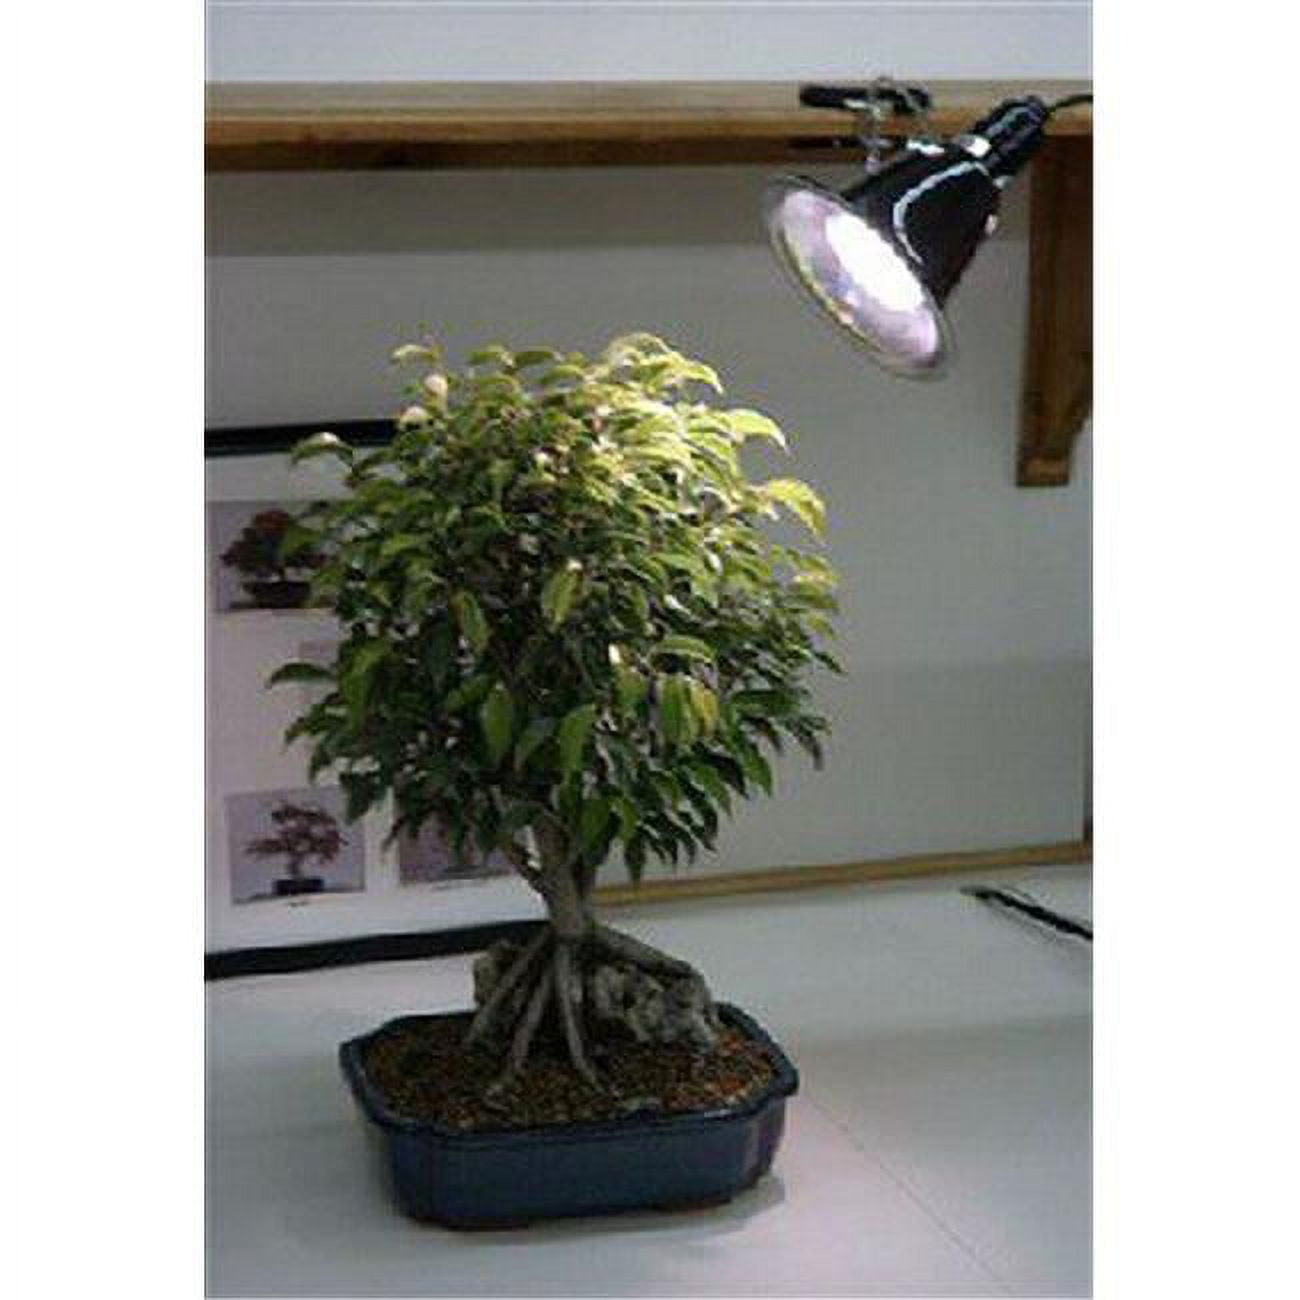 Picture of Bonsai Boy e3065 32W Grow Light Kit - Full Daylight Spectrum - Fluorescent Grow Light 150W Equivalent